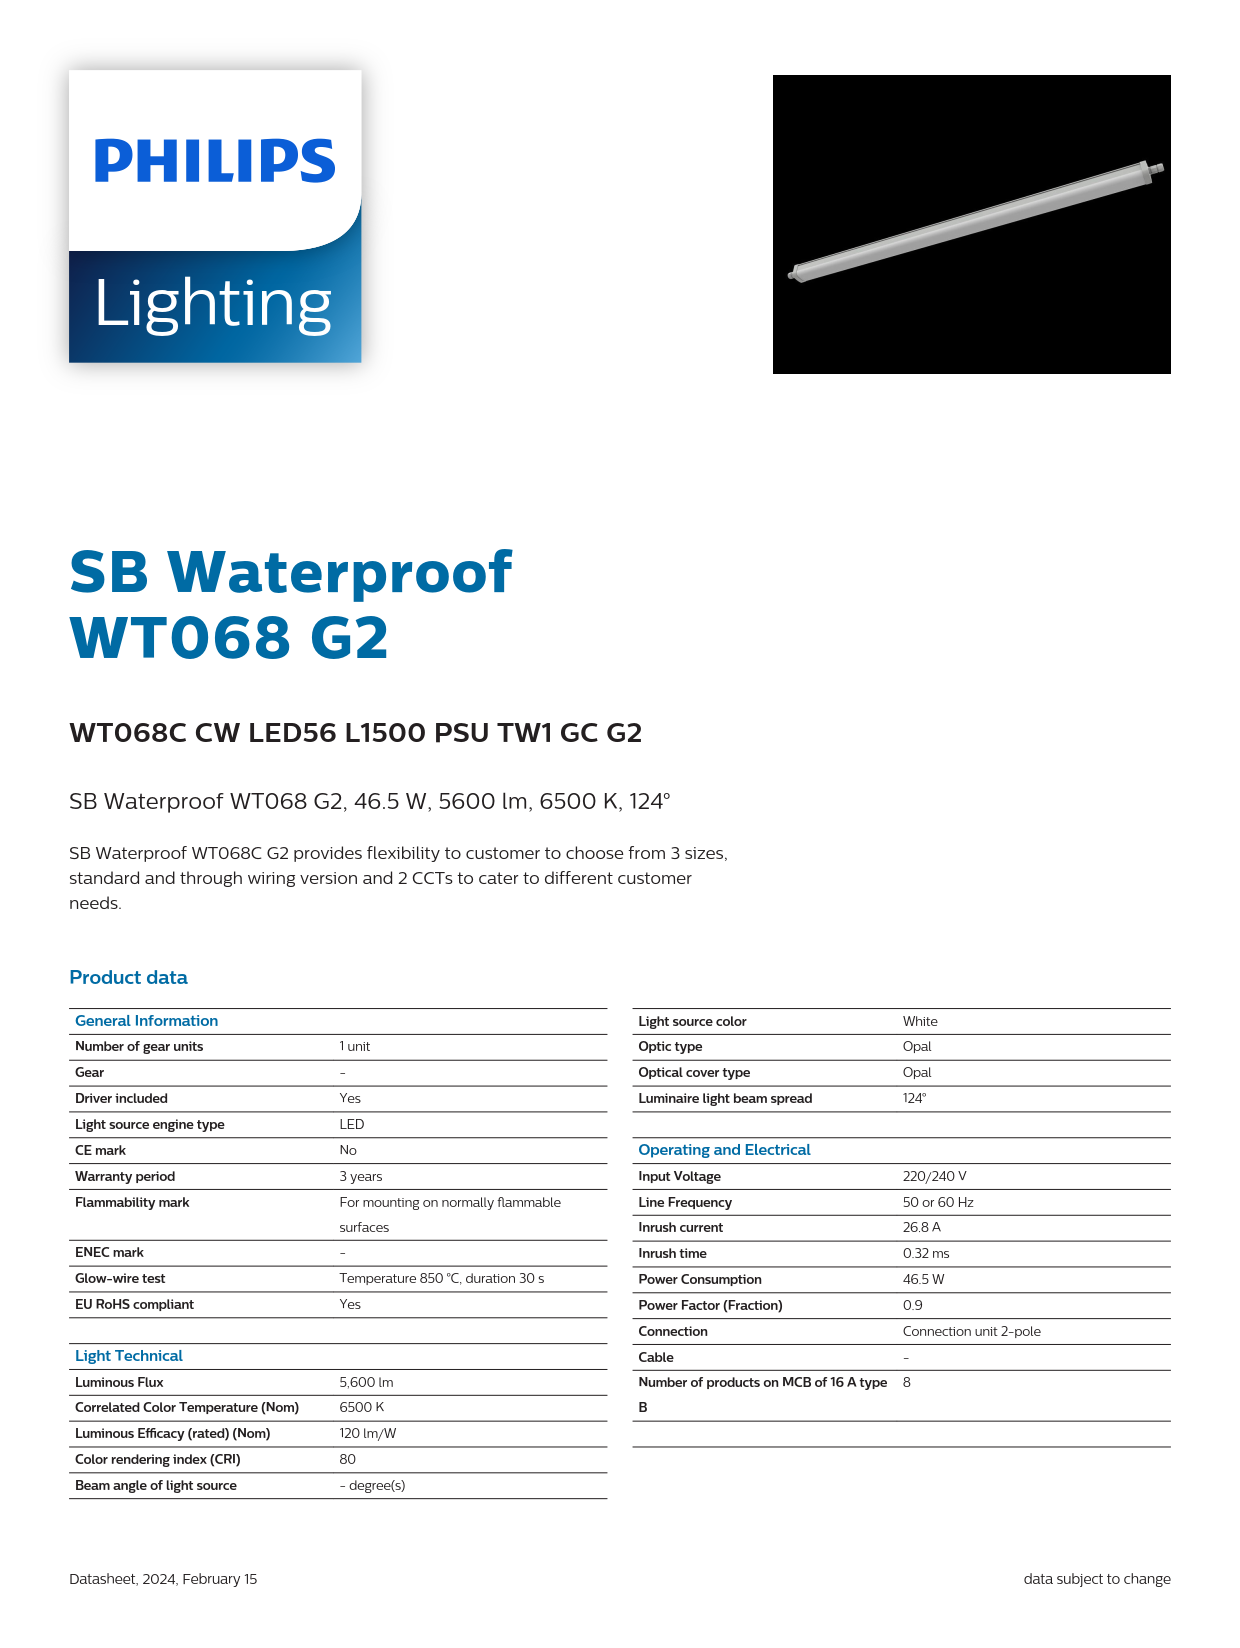 PHILIPS Waterproof Fixture light WT068C CW LED56 L1500 PSU TW1 GC G2 911401862285